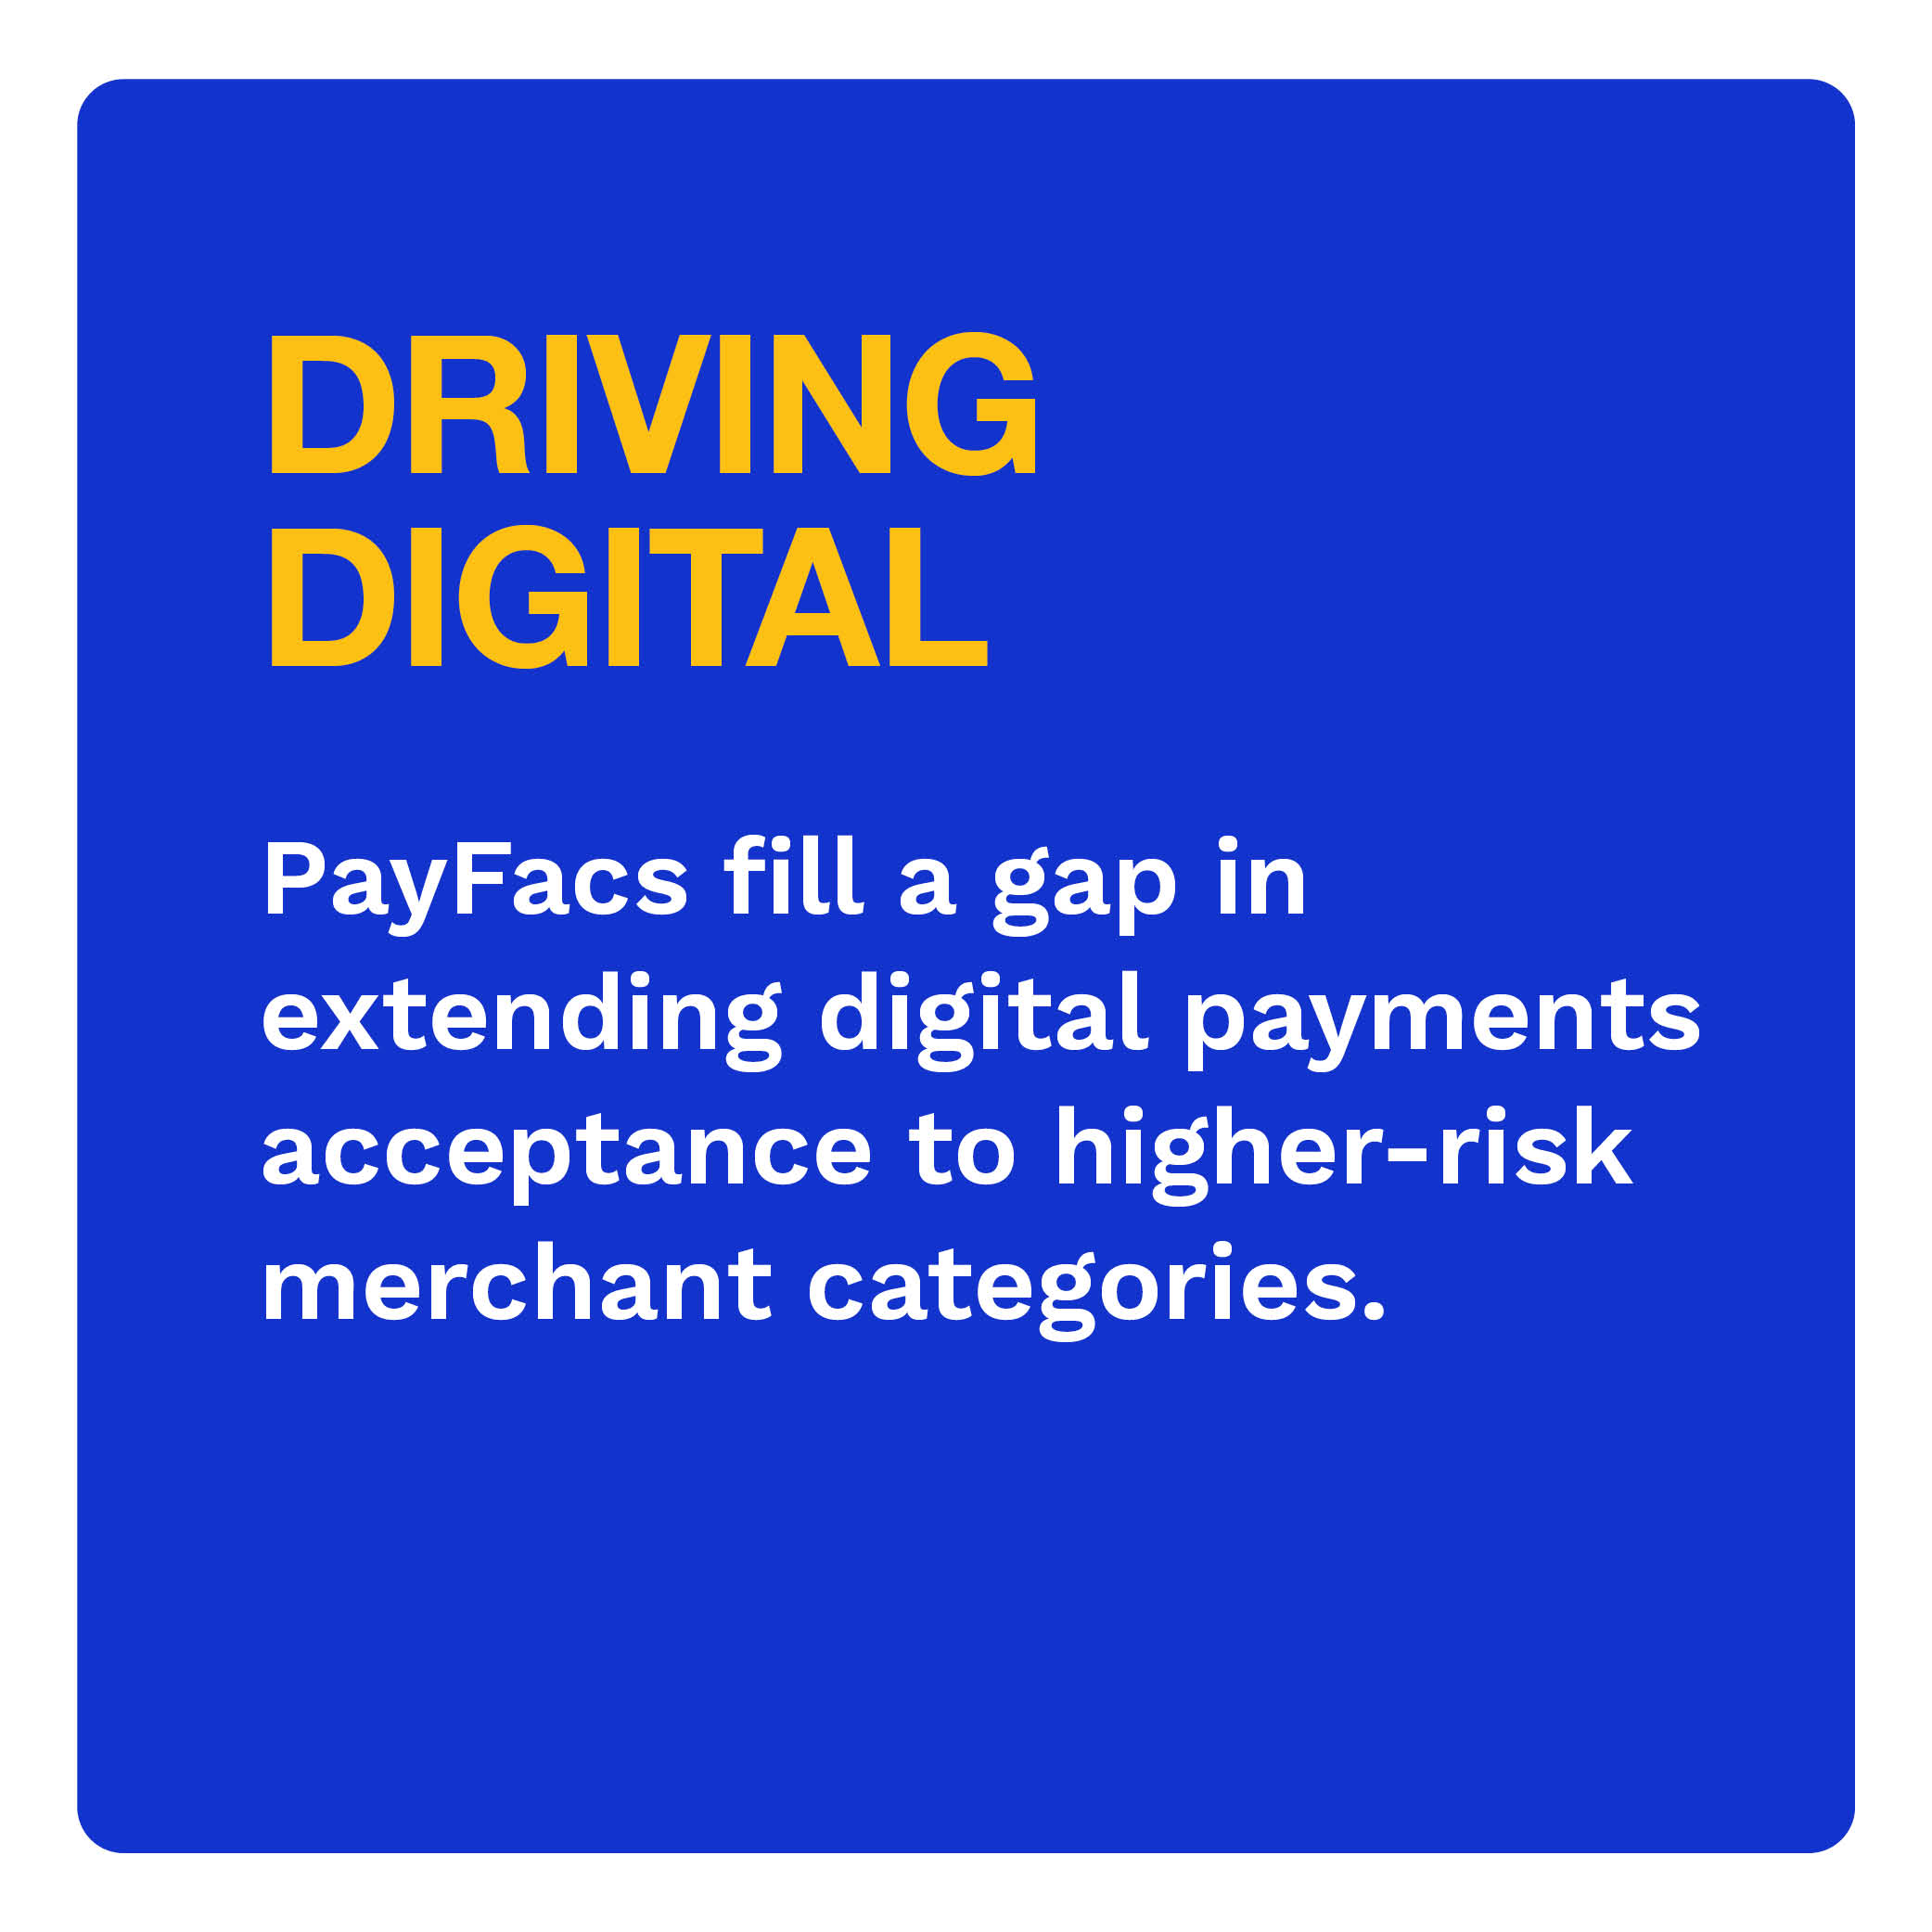 DRIVING DIGITAL: PayFacs fill a gap in extending digital payments acceptance to higher-risk merchant categories.